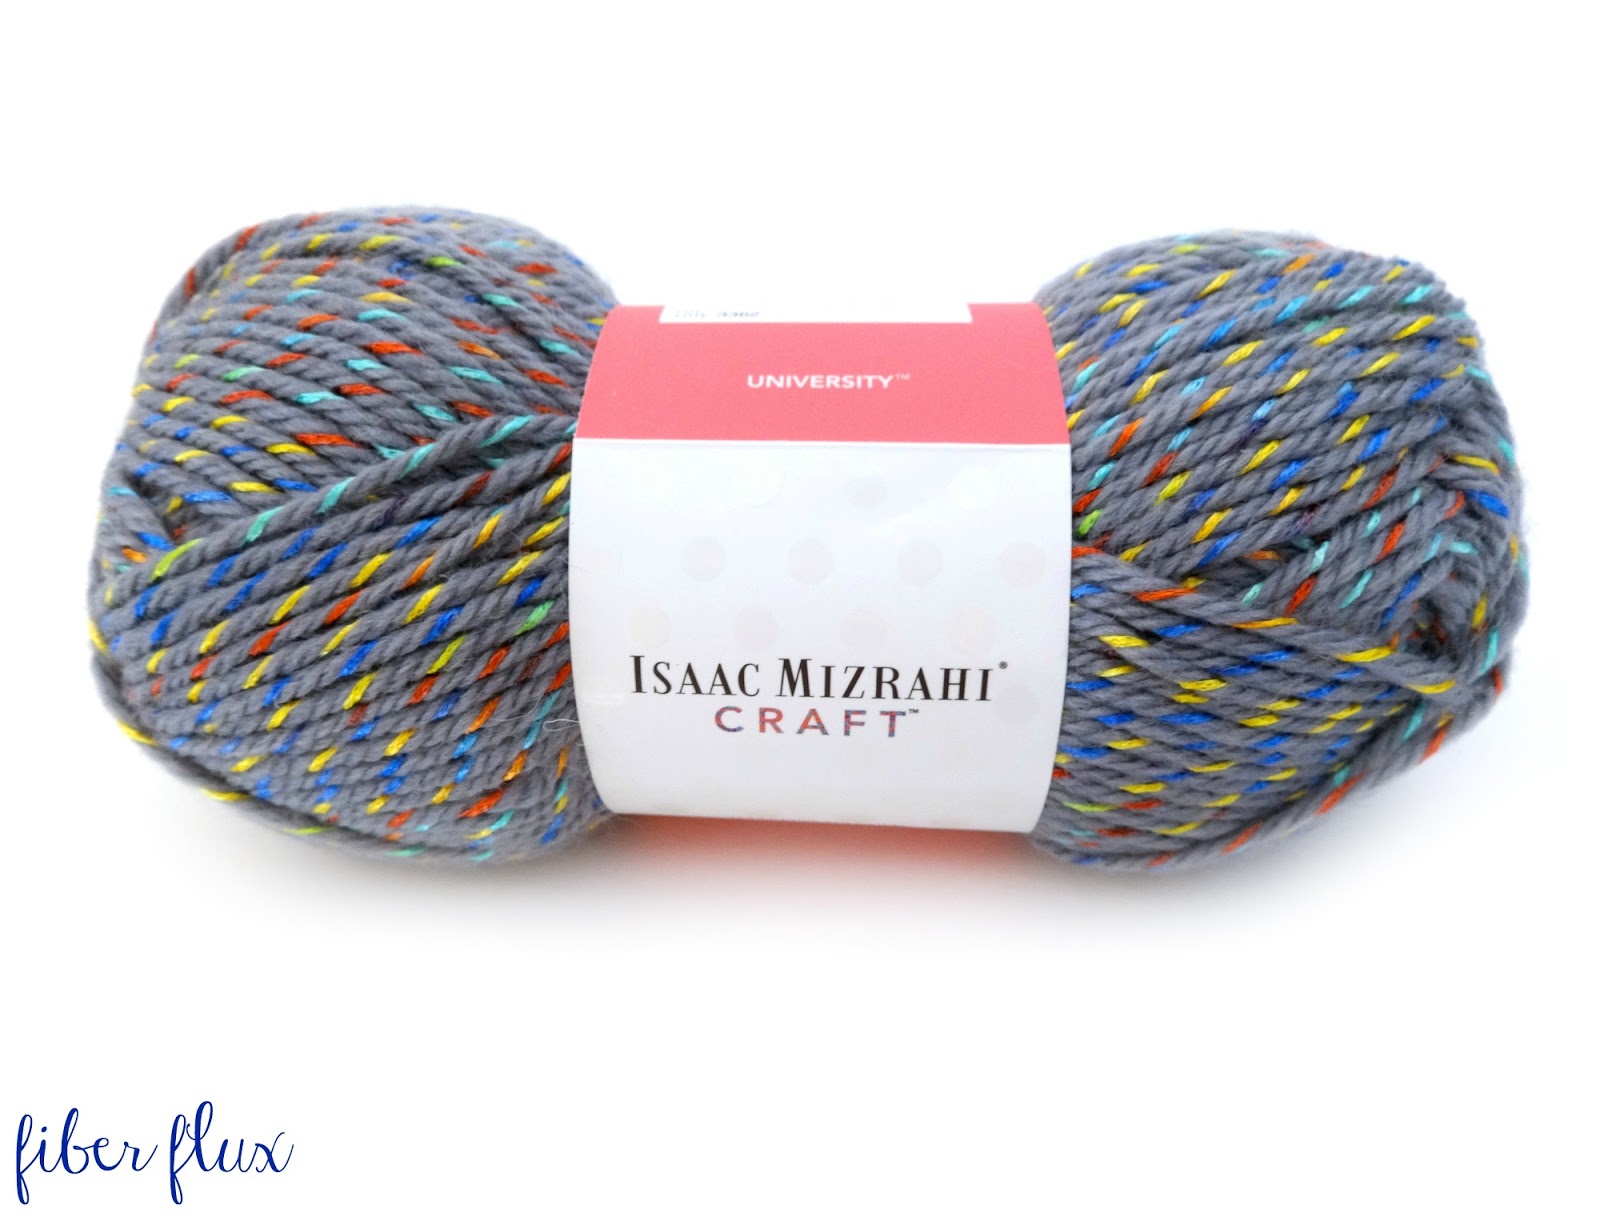 Fiber Flux: Yarn 101: Issac Mizrahi Craft, University Yarn